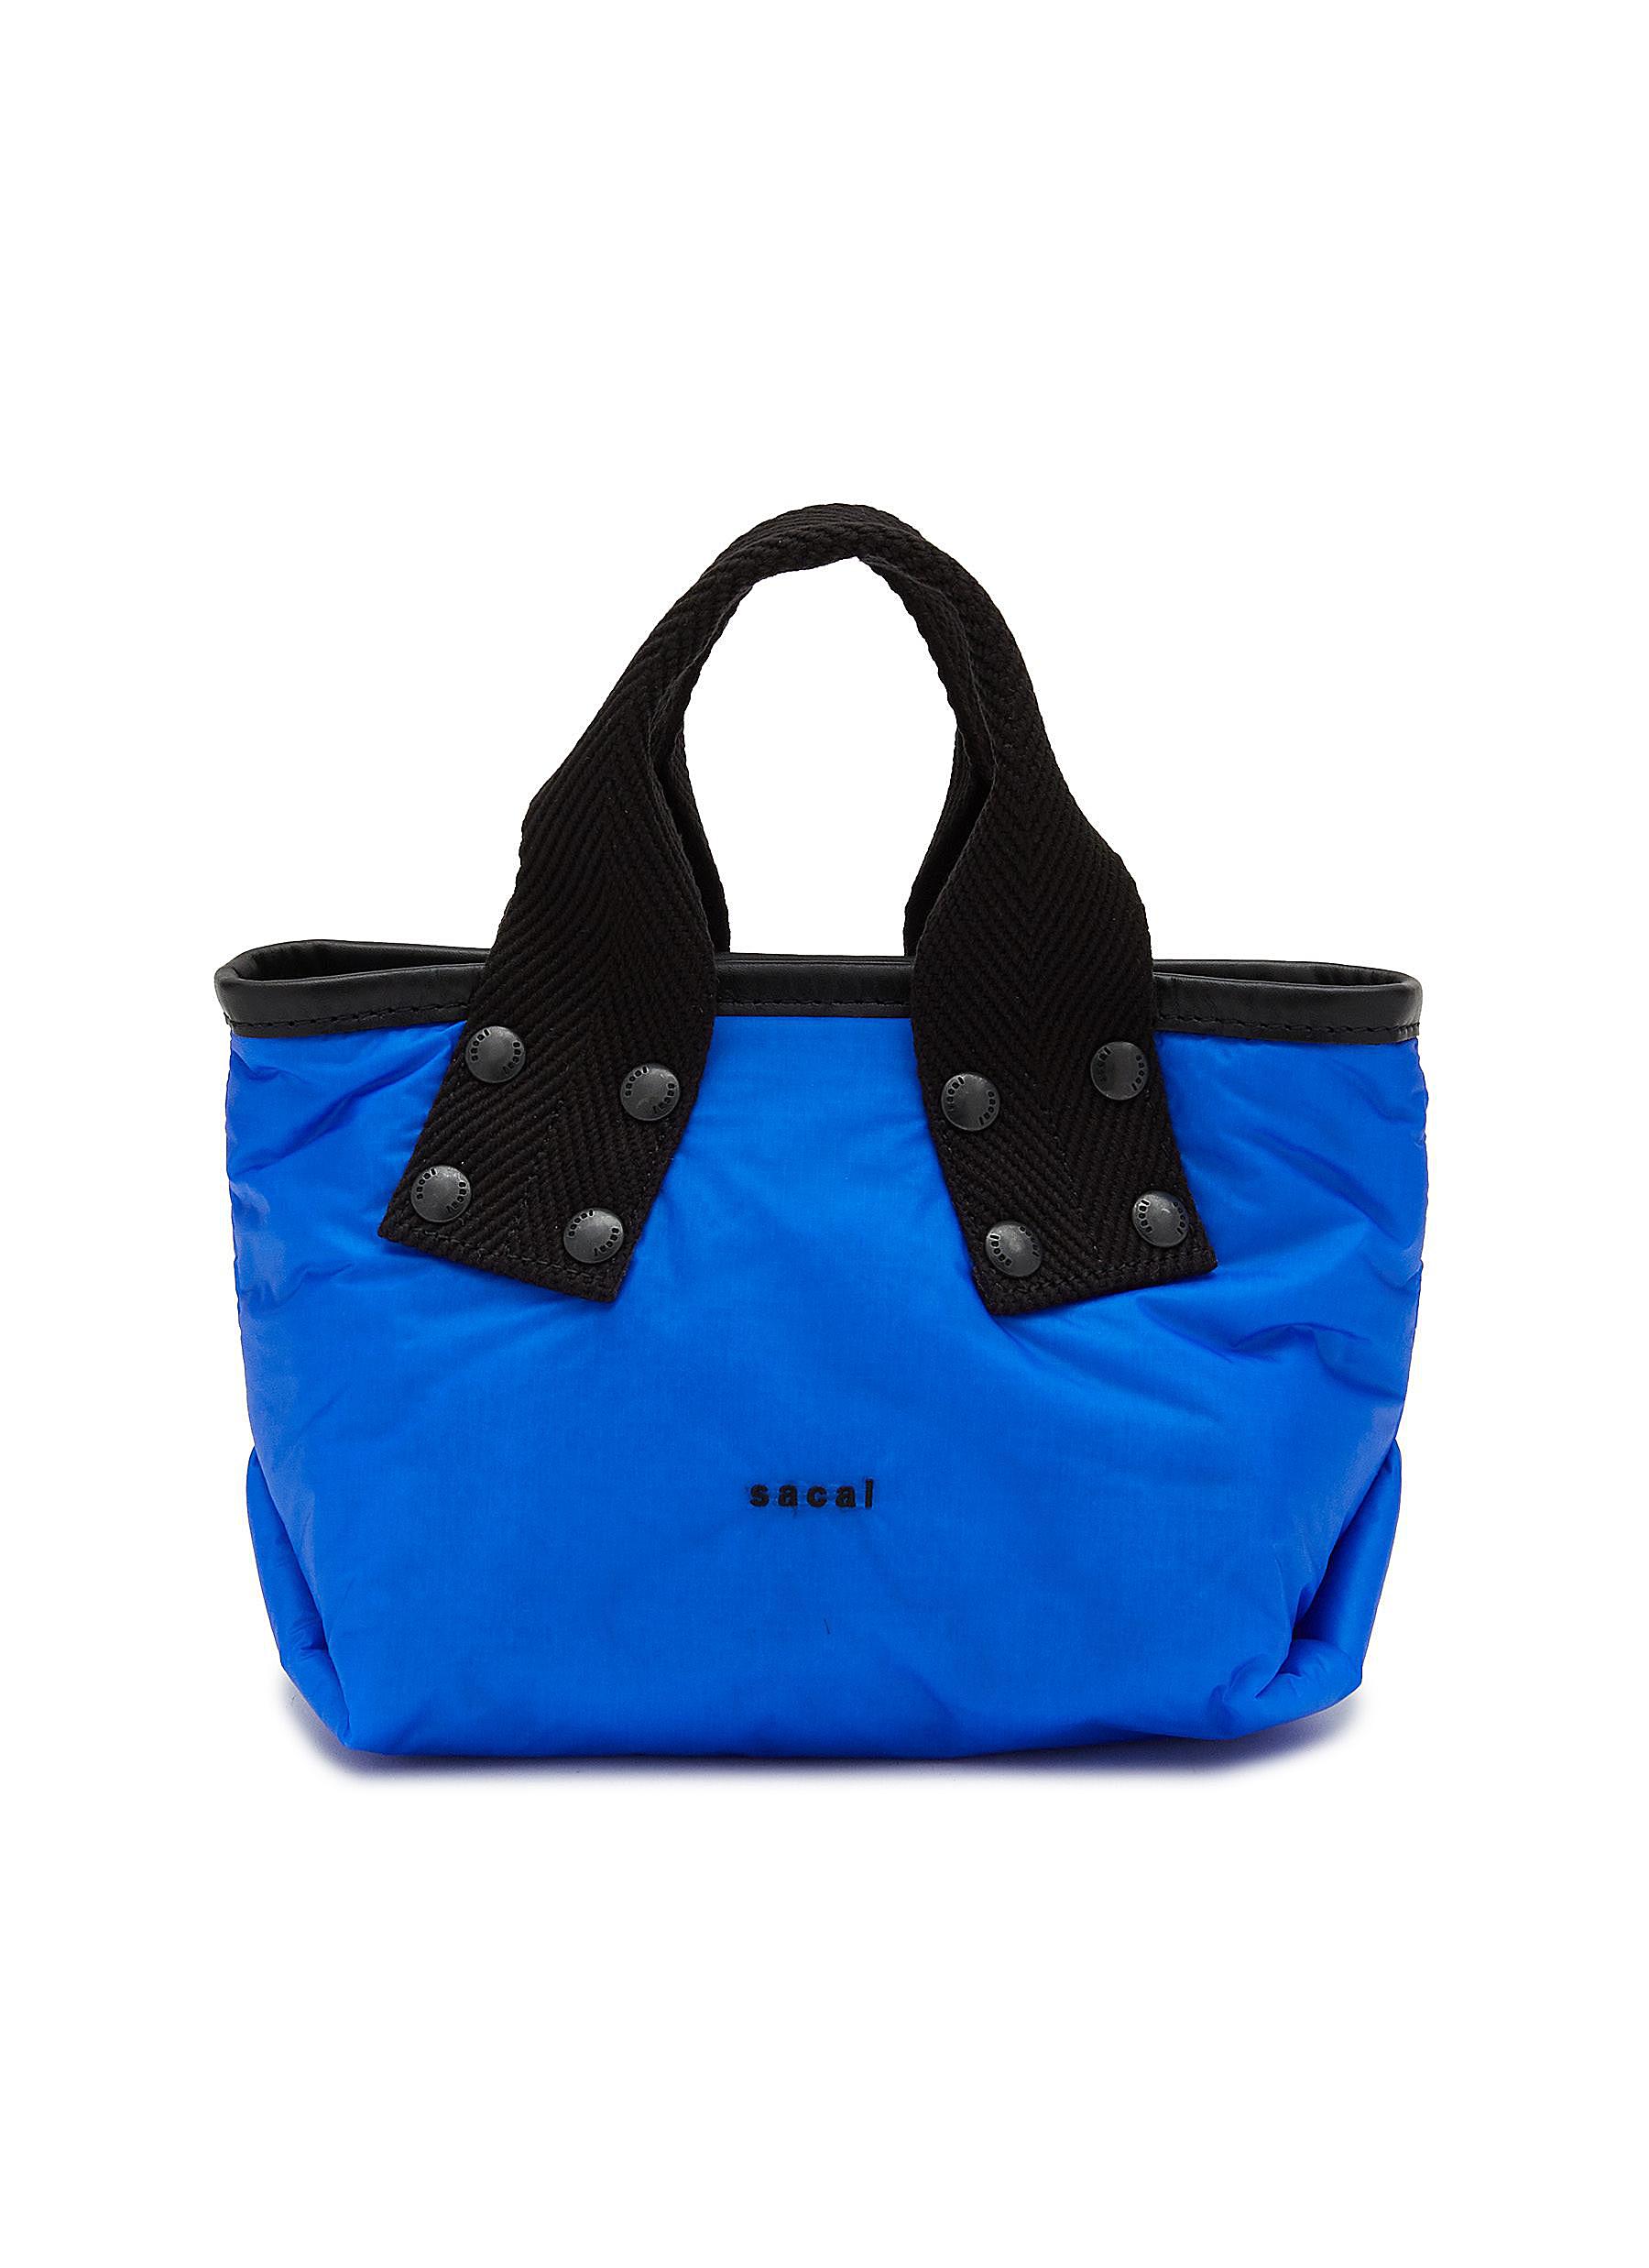 SACAI | Small Skytex Tote Bag | BLUE | Beauty | Lane Crawford